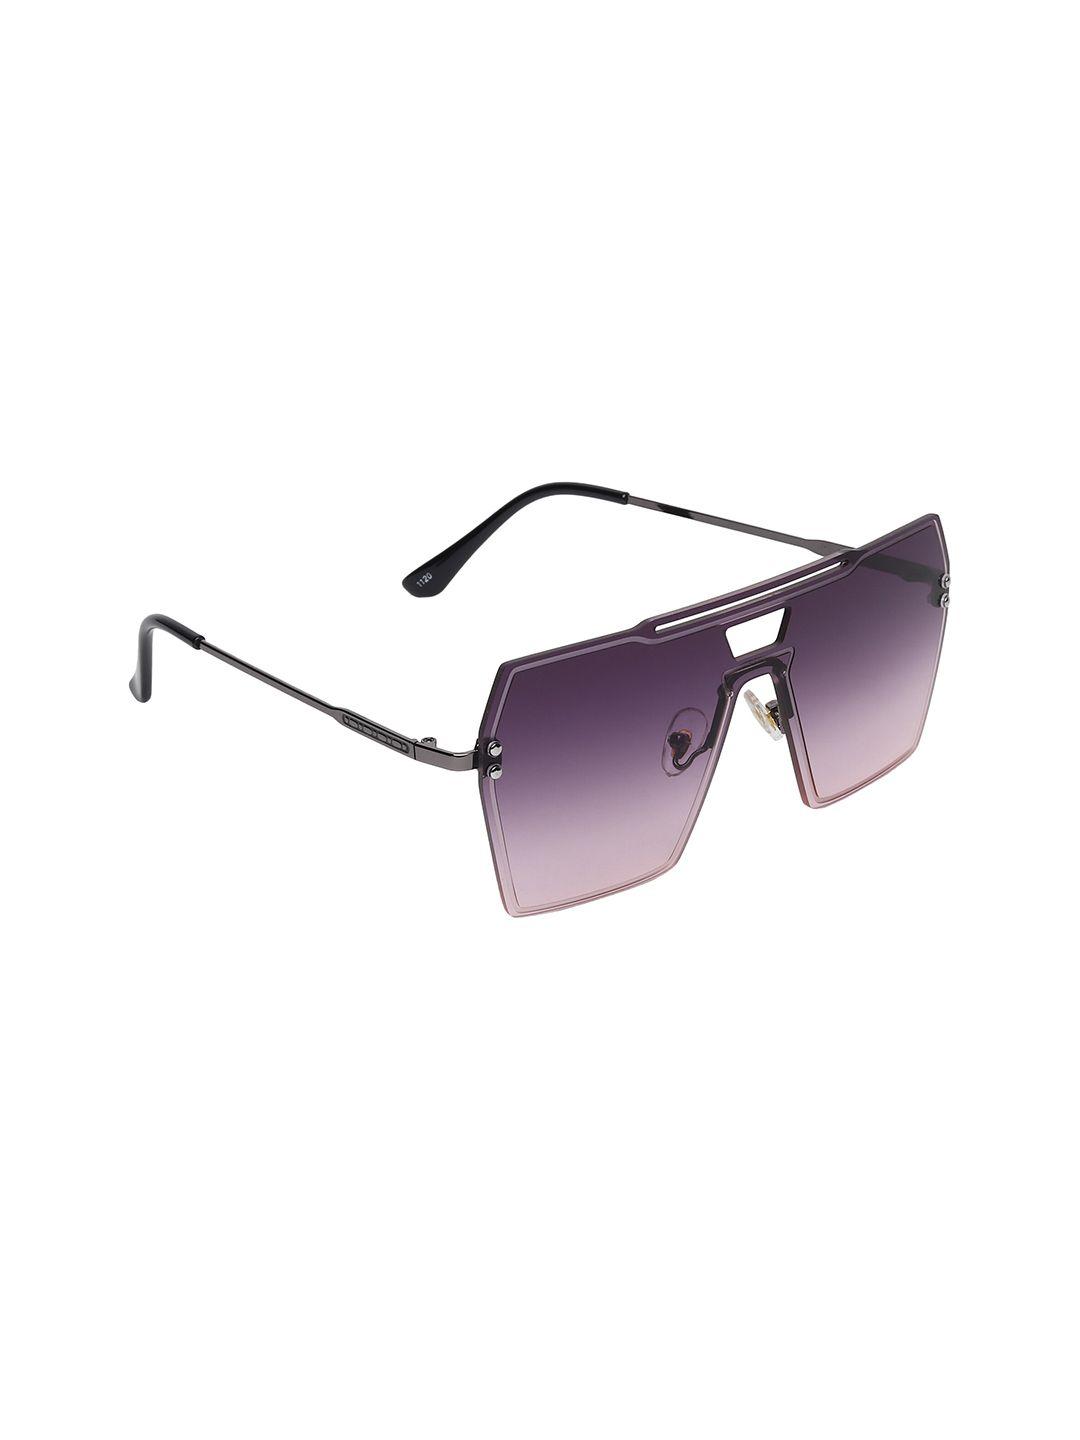 swiss design full rim square sunglasses with uv protected lens sdsg-1120-04